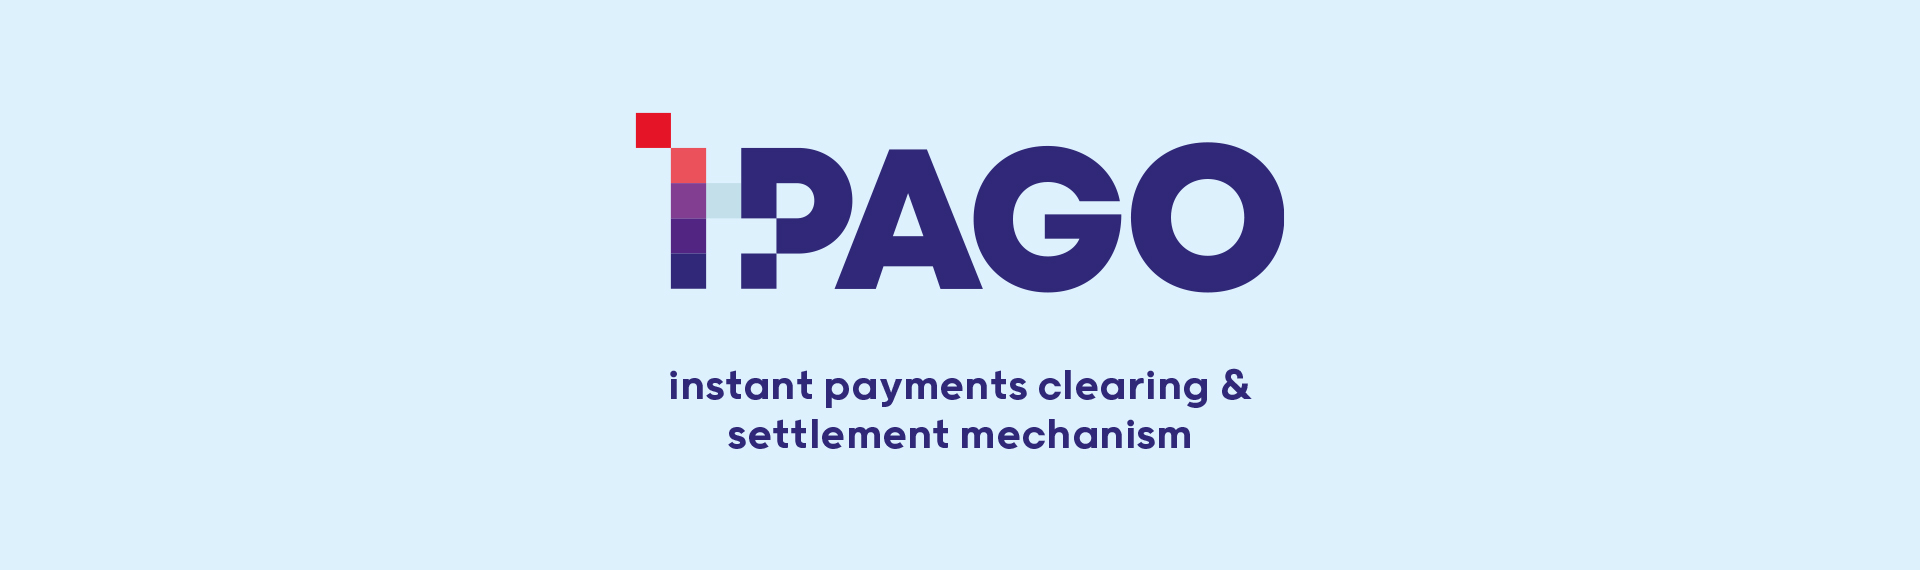 i-pago campaign main